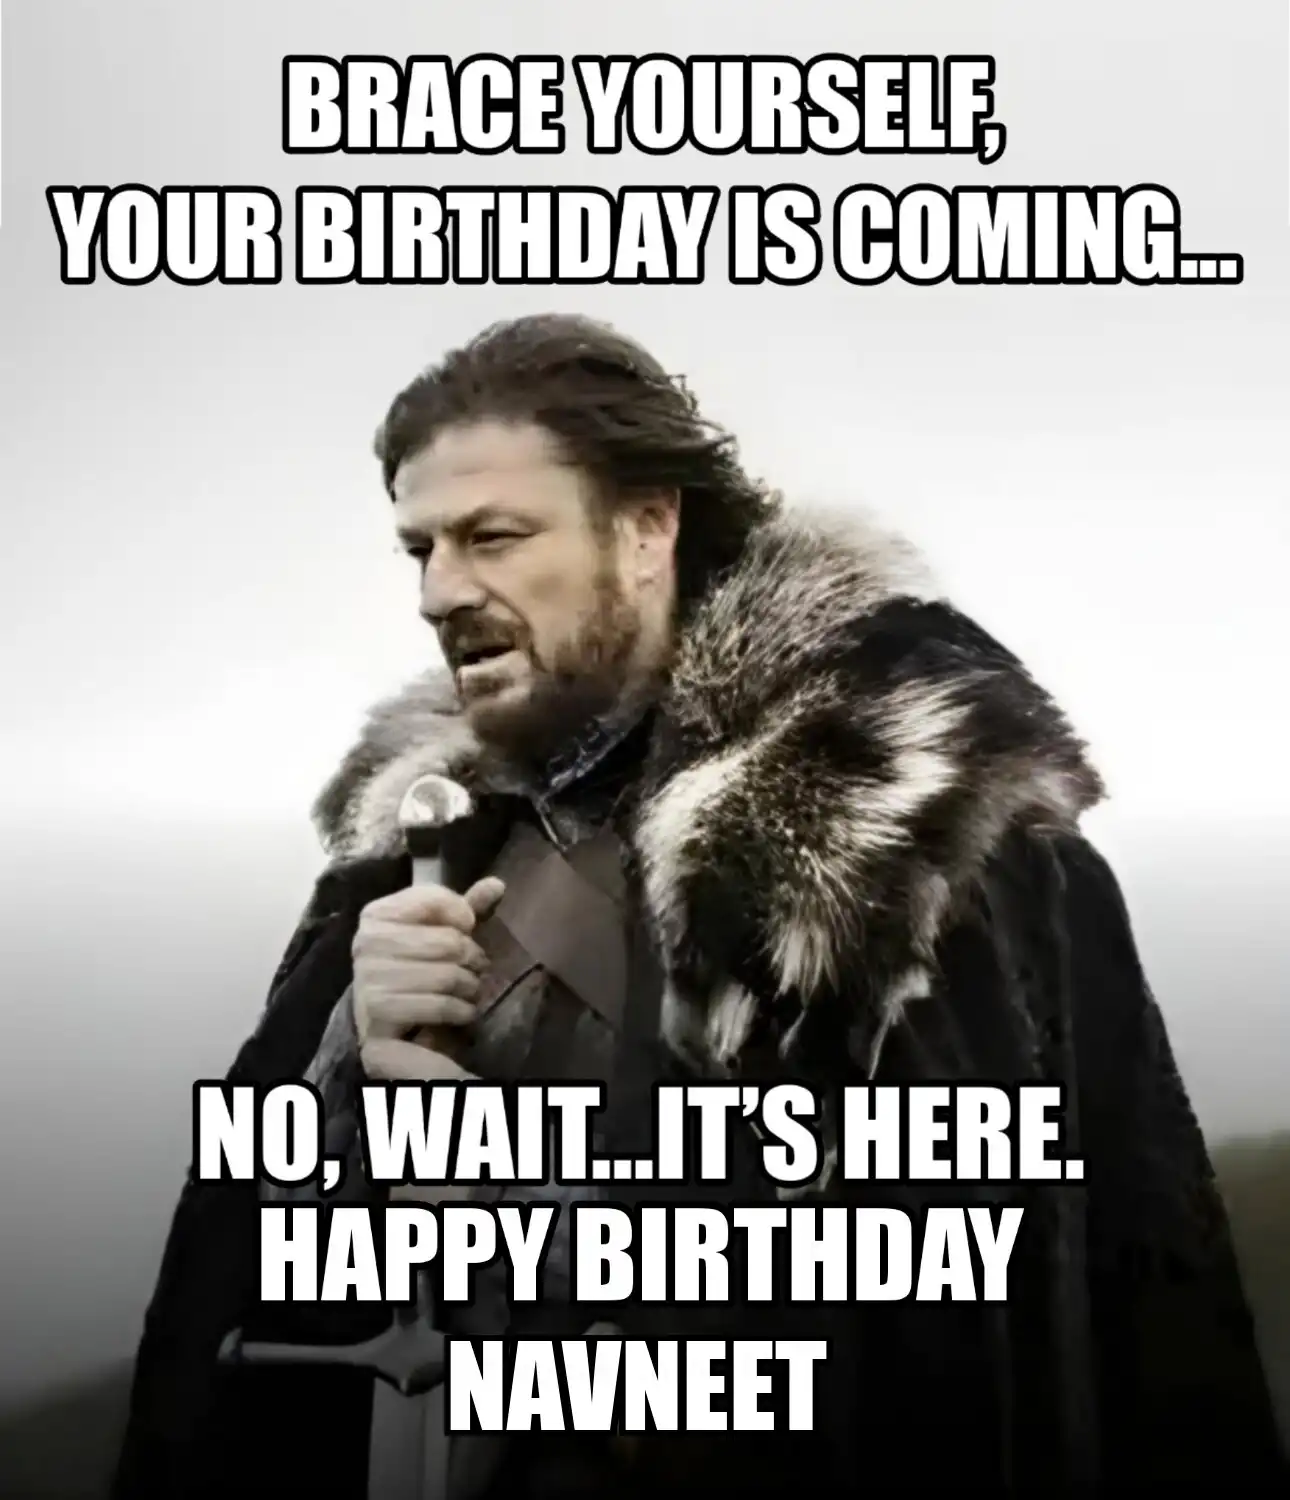 Happy Birthday Navneet Brace Yourself Your Birthday Is Coming Meme